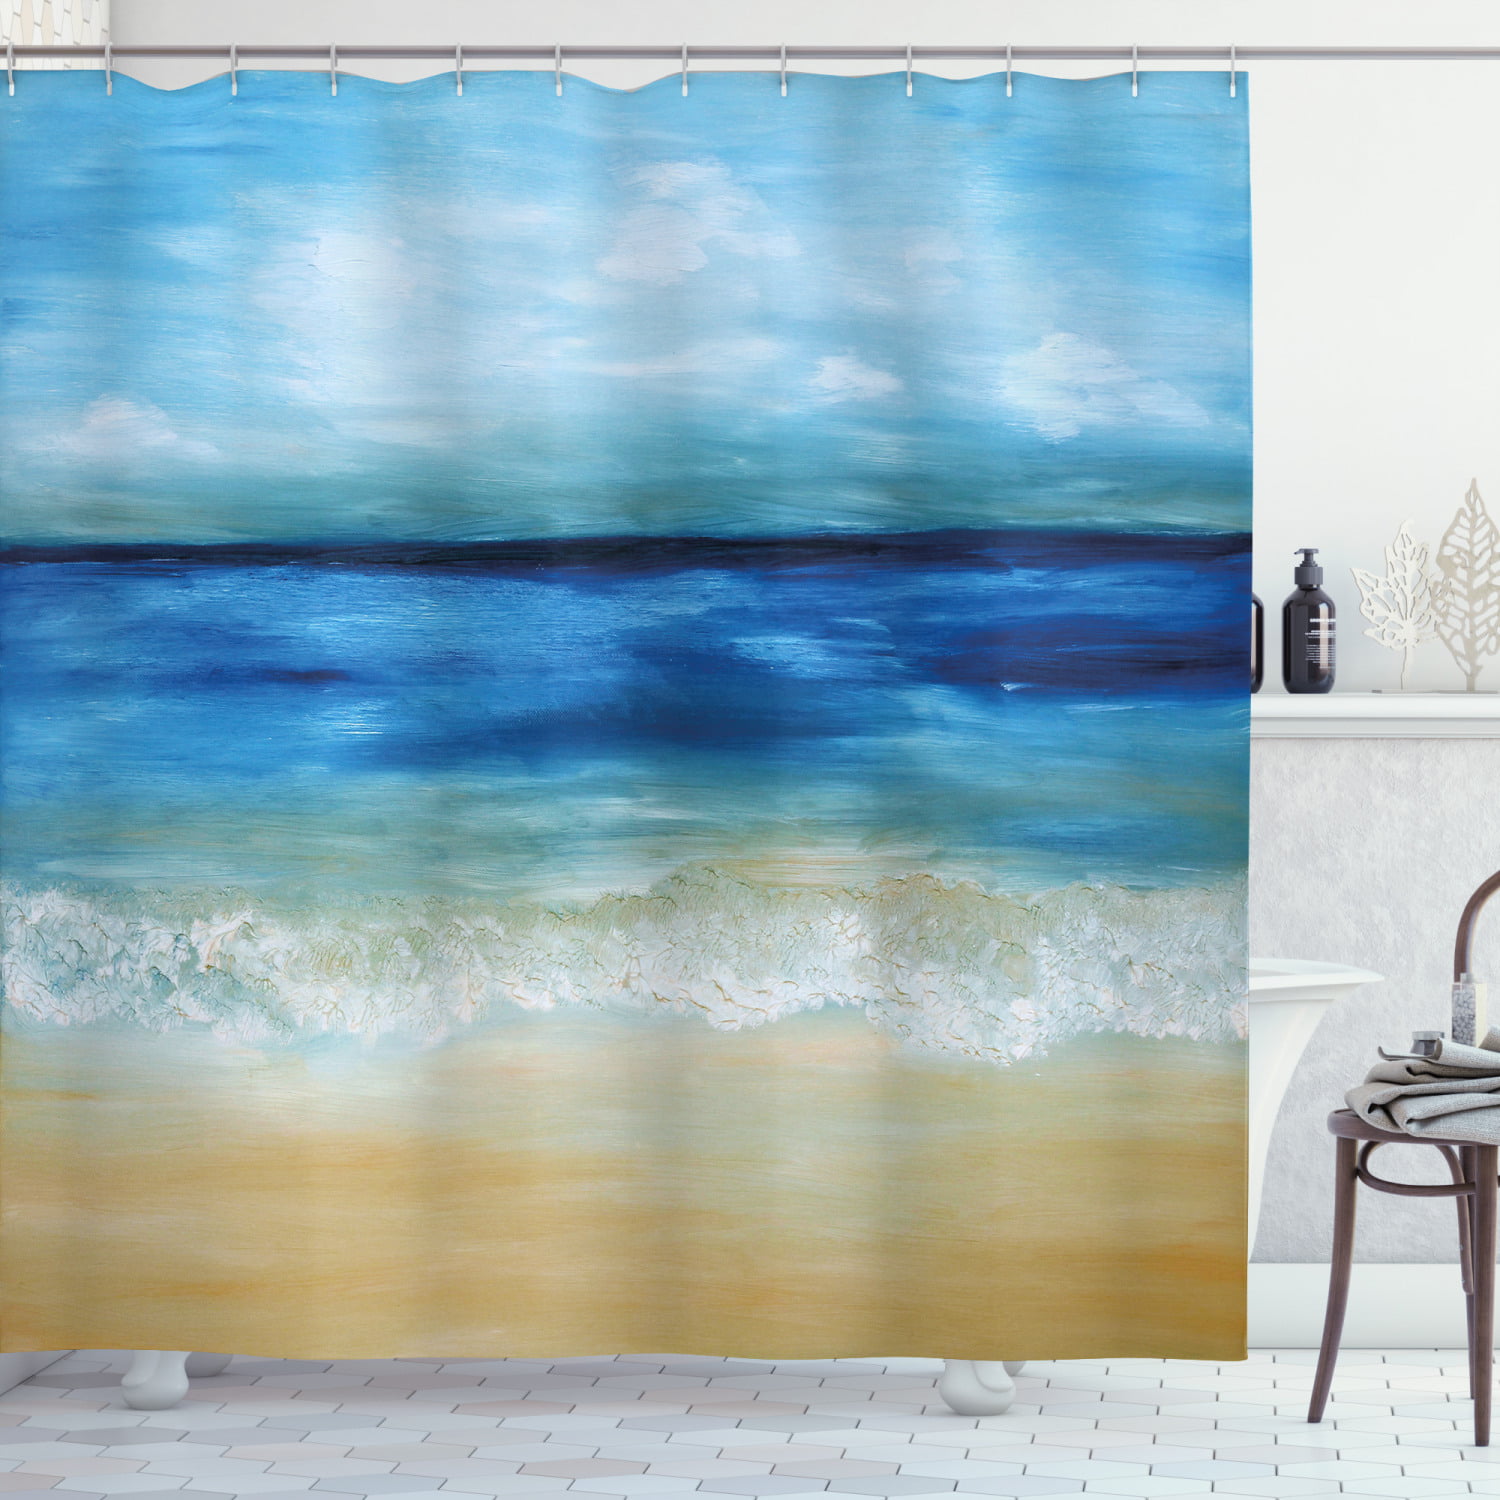 Details about   Art Shower Curtain Tropical Sandy Beach Print for Bathroom 